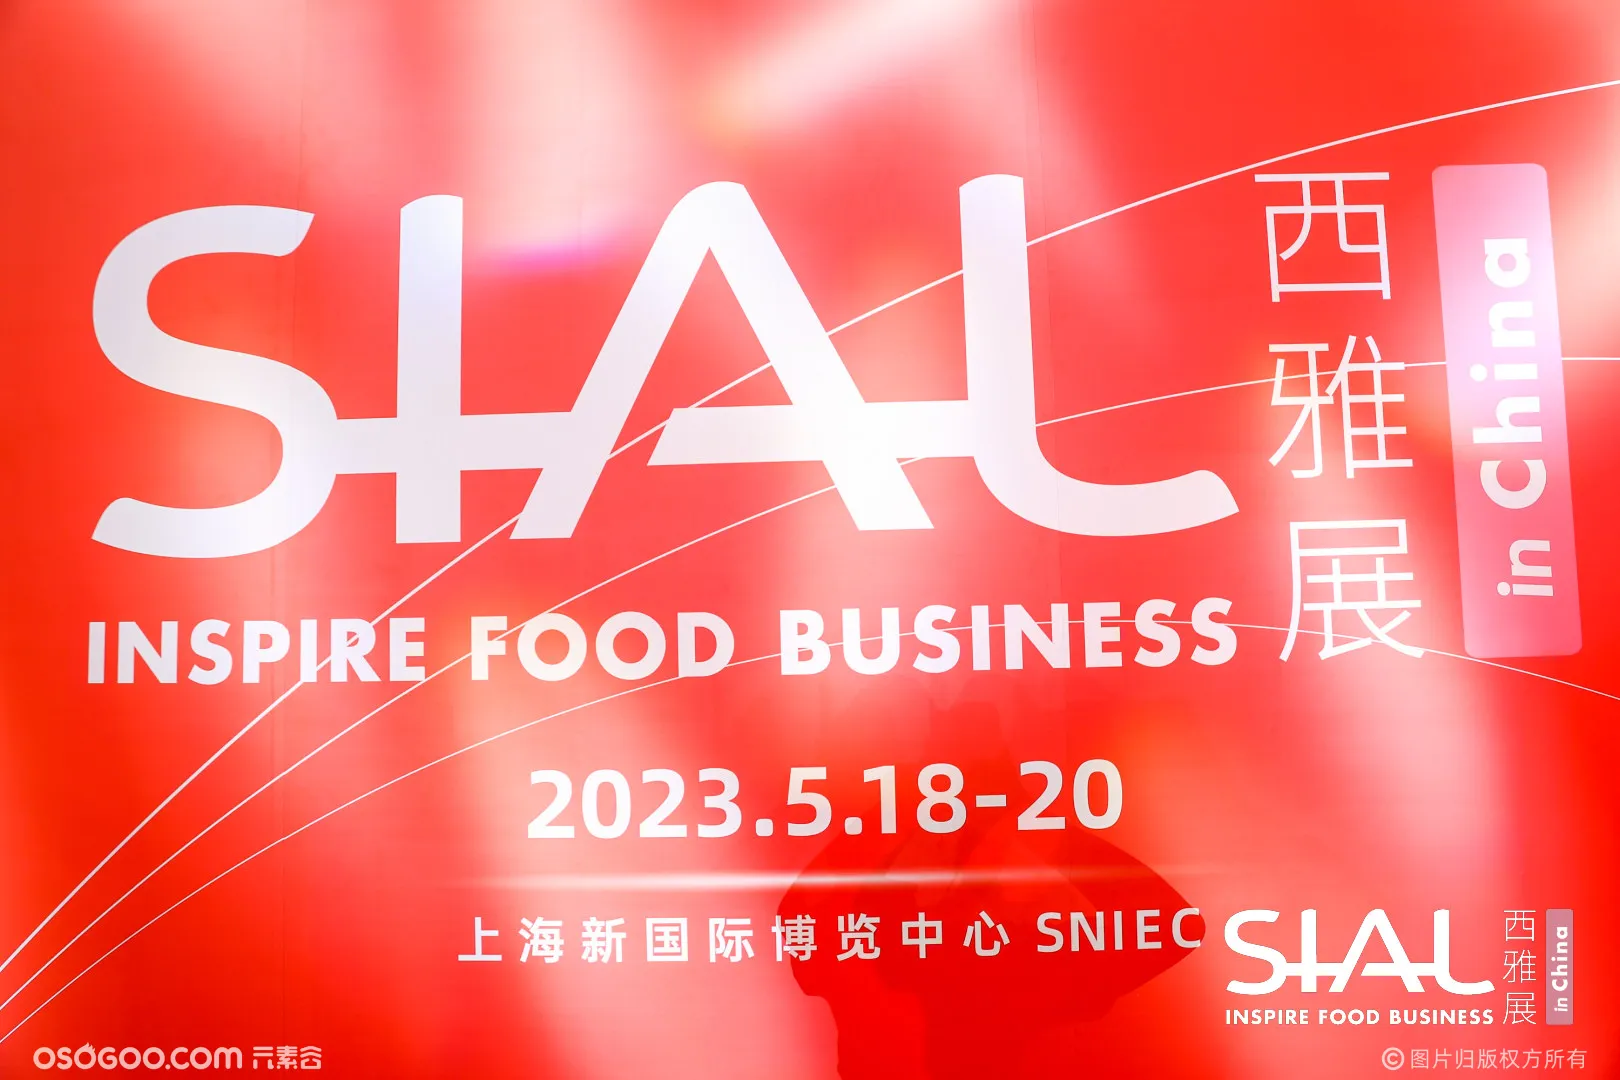 SIAL世界食品产业峰会【SIAL西雅国际食品展】